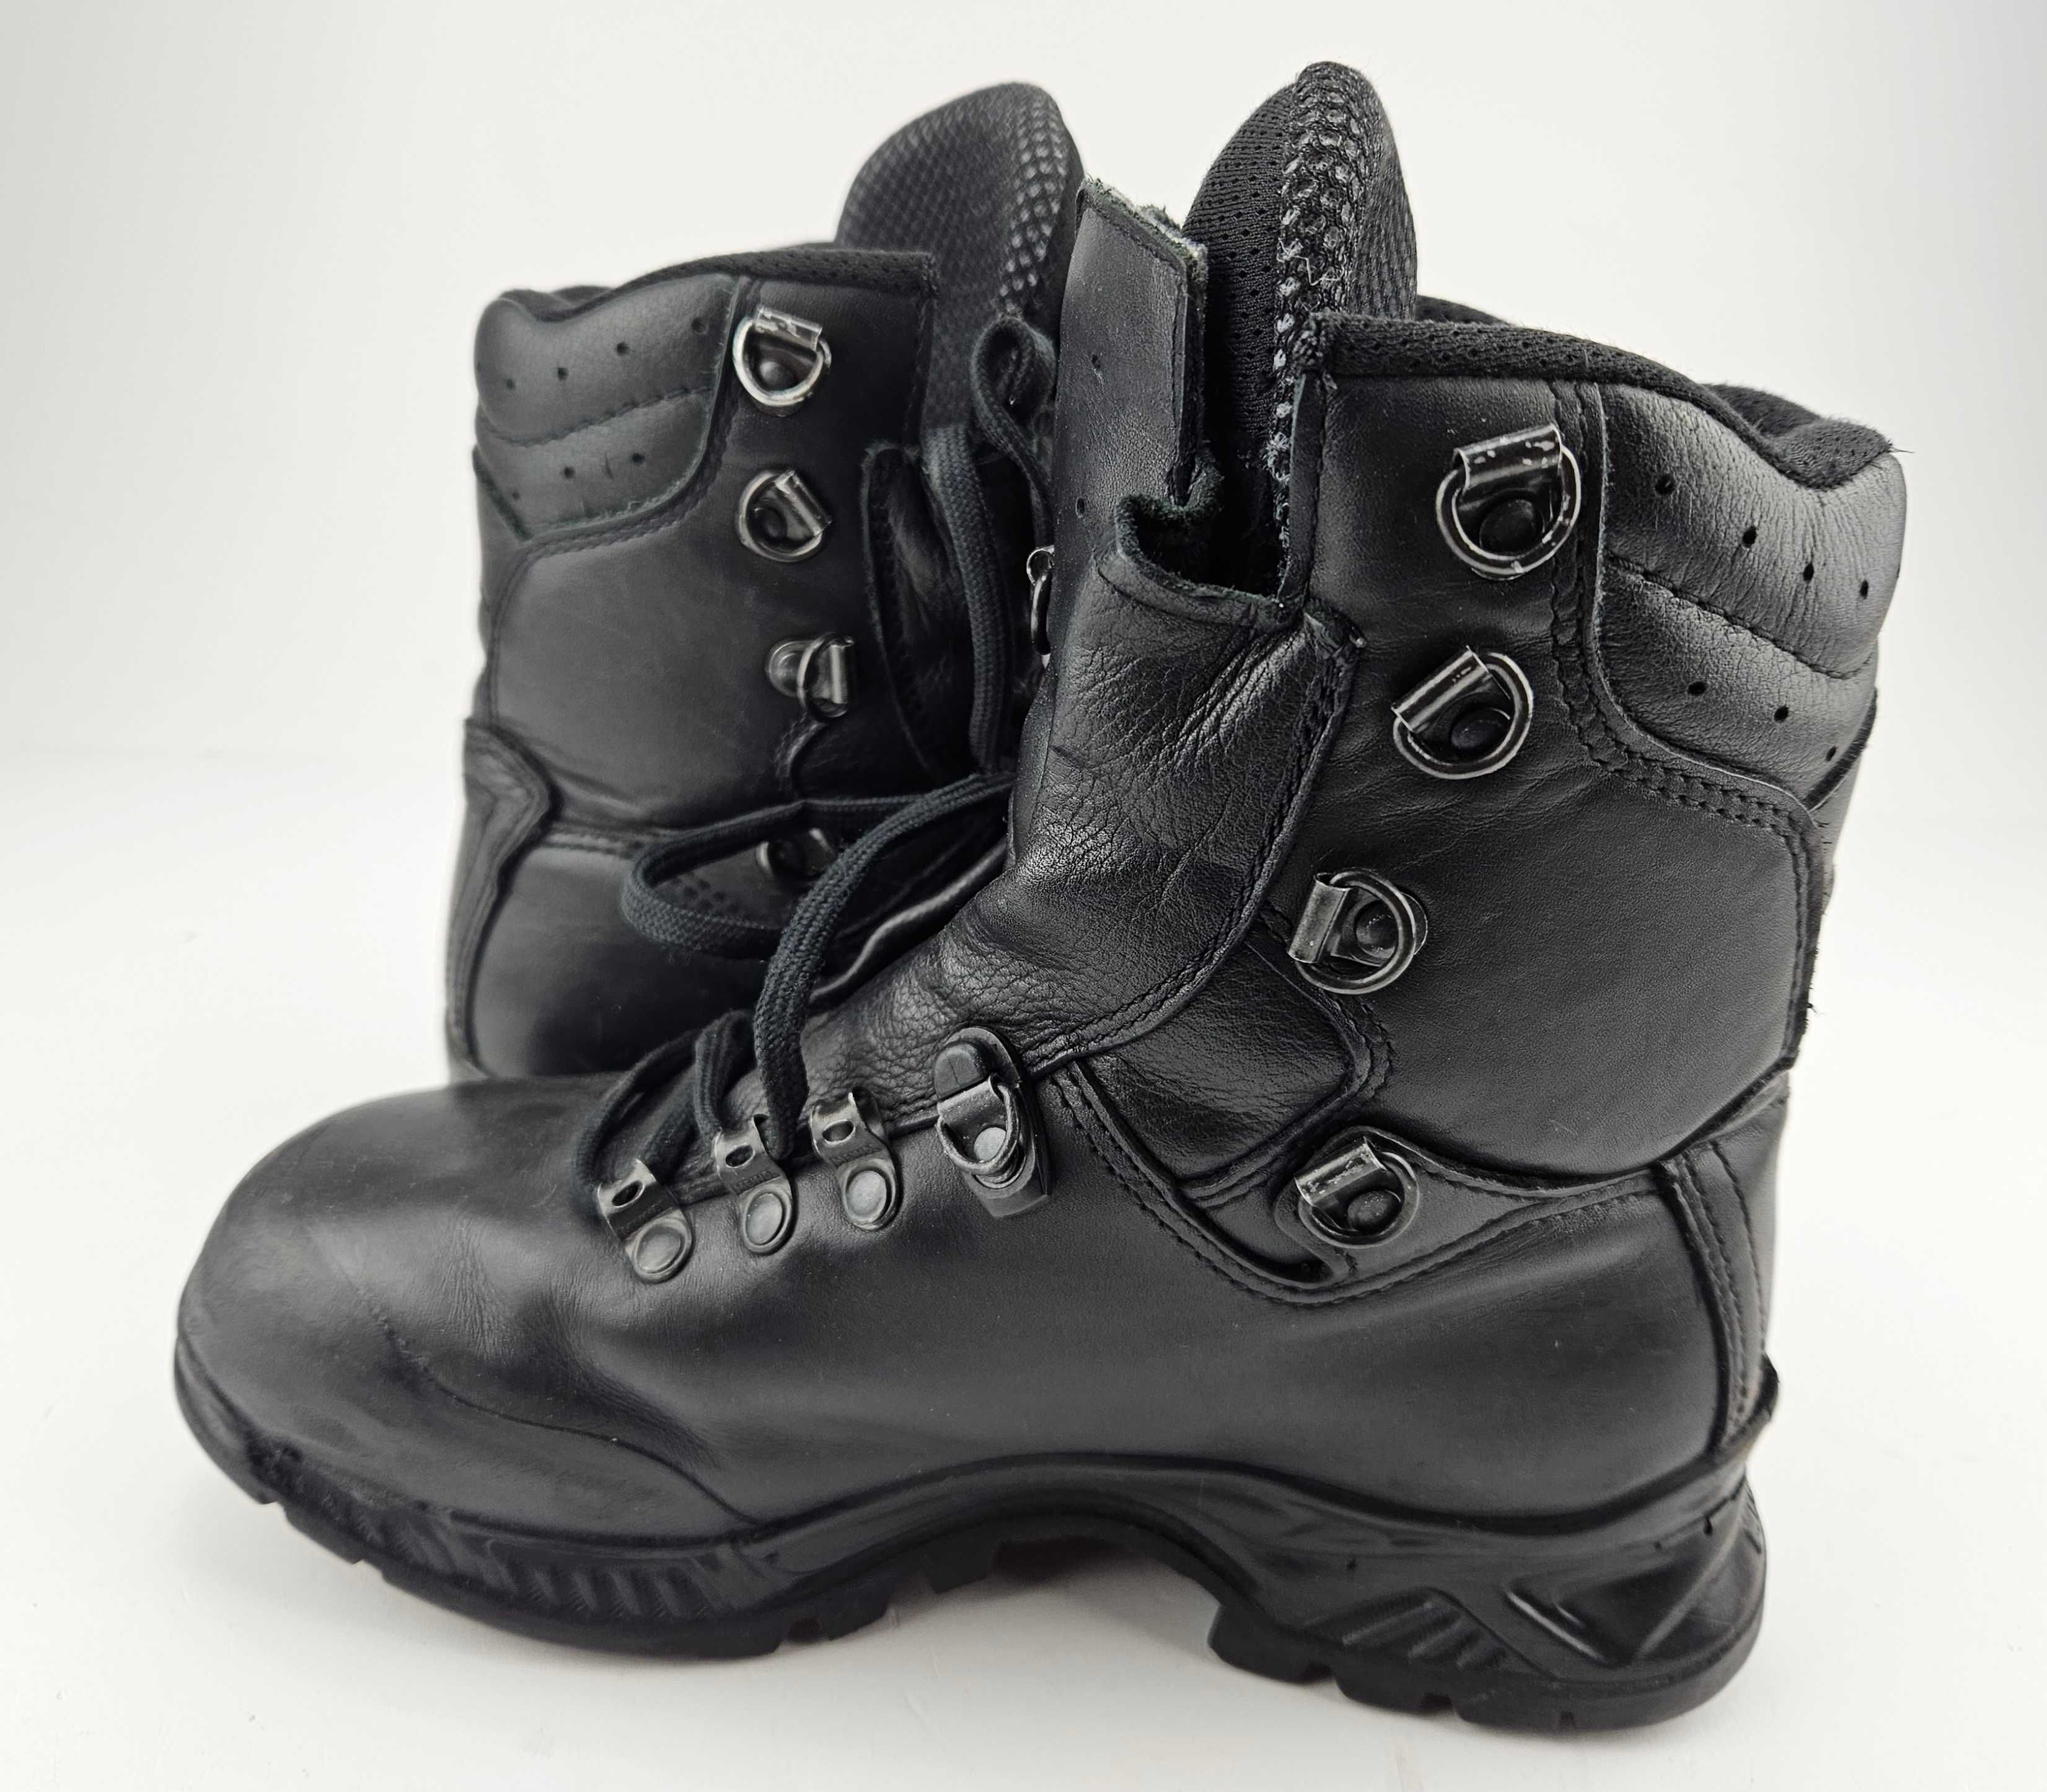 Buty wojskowe Meindl Combat Extreme r. 37